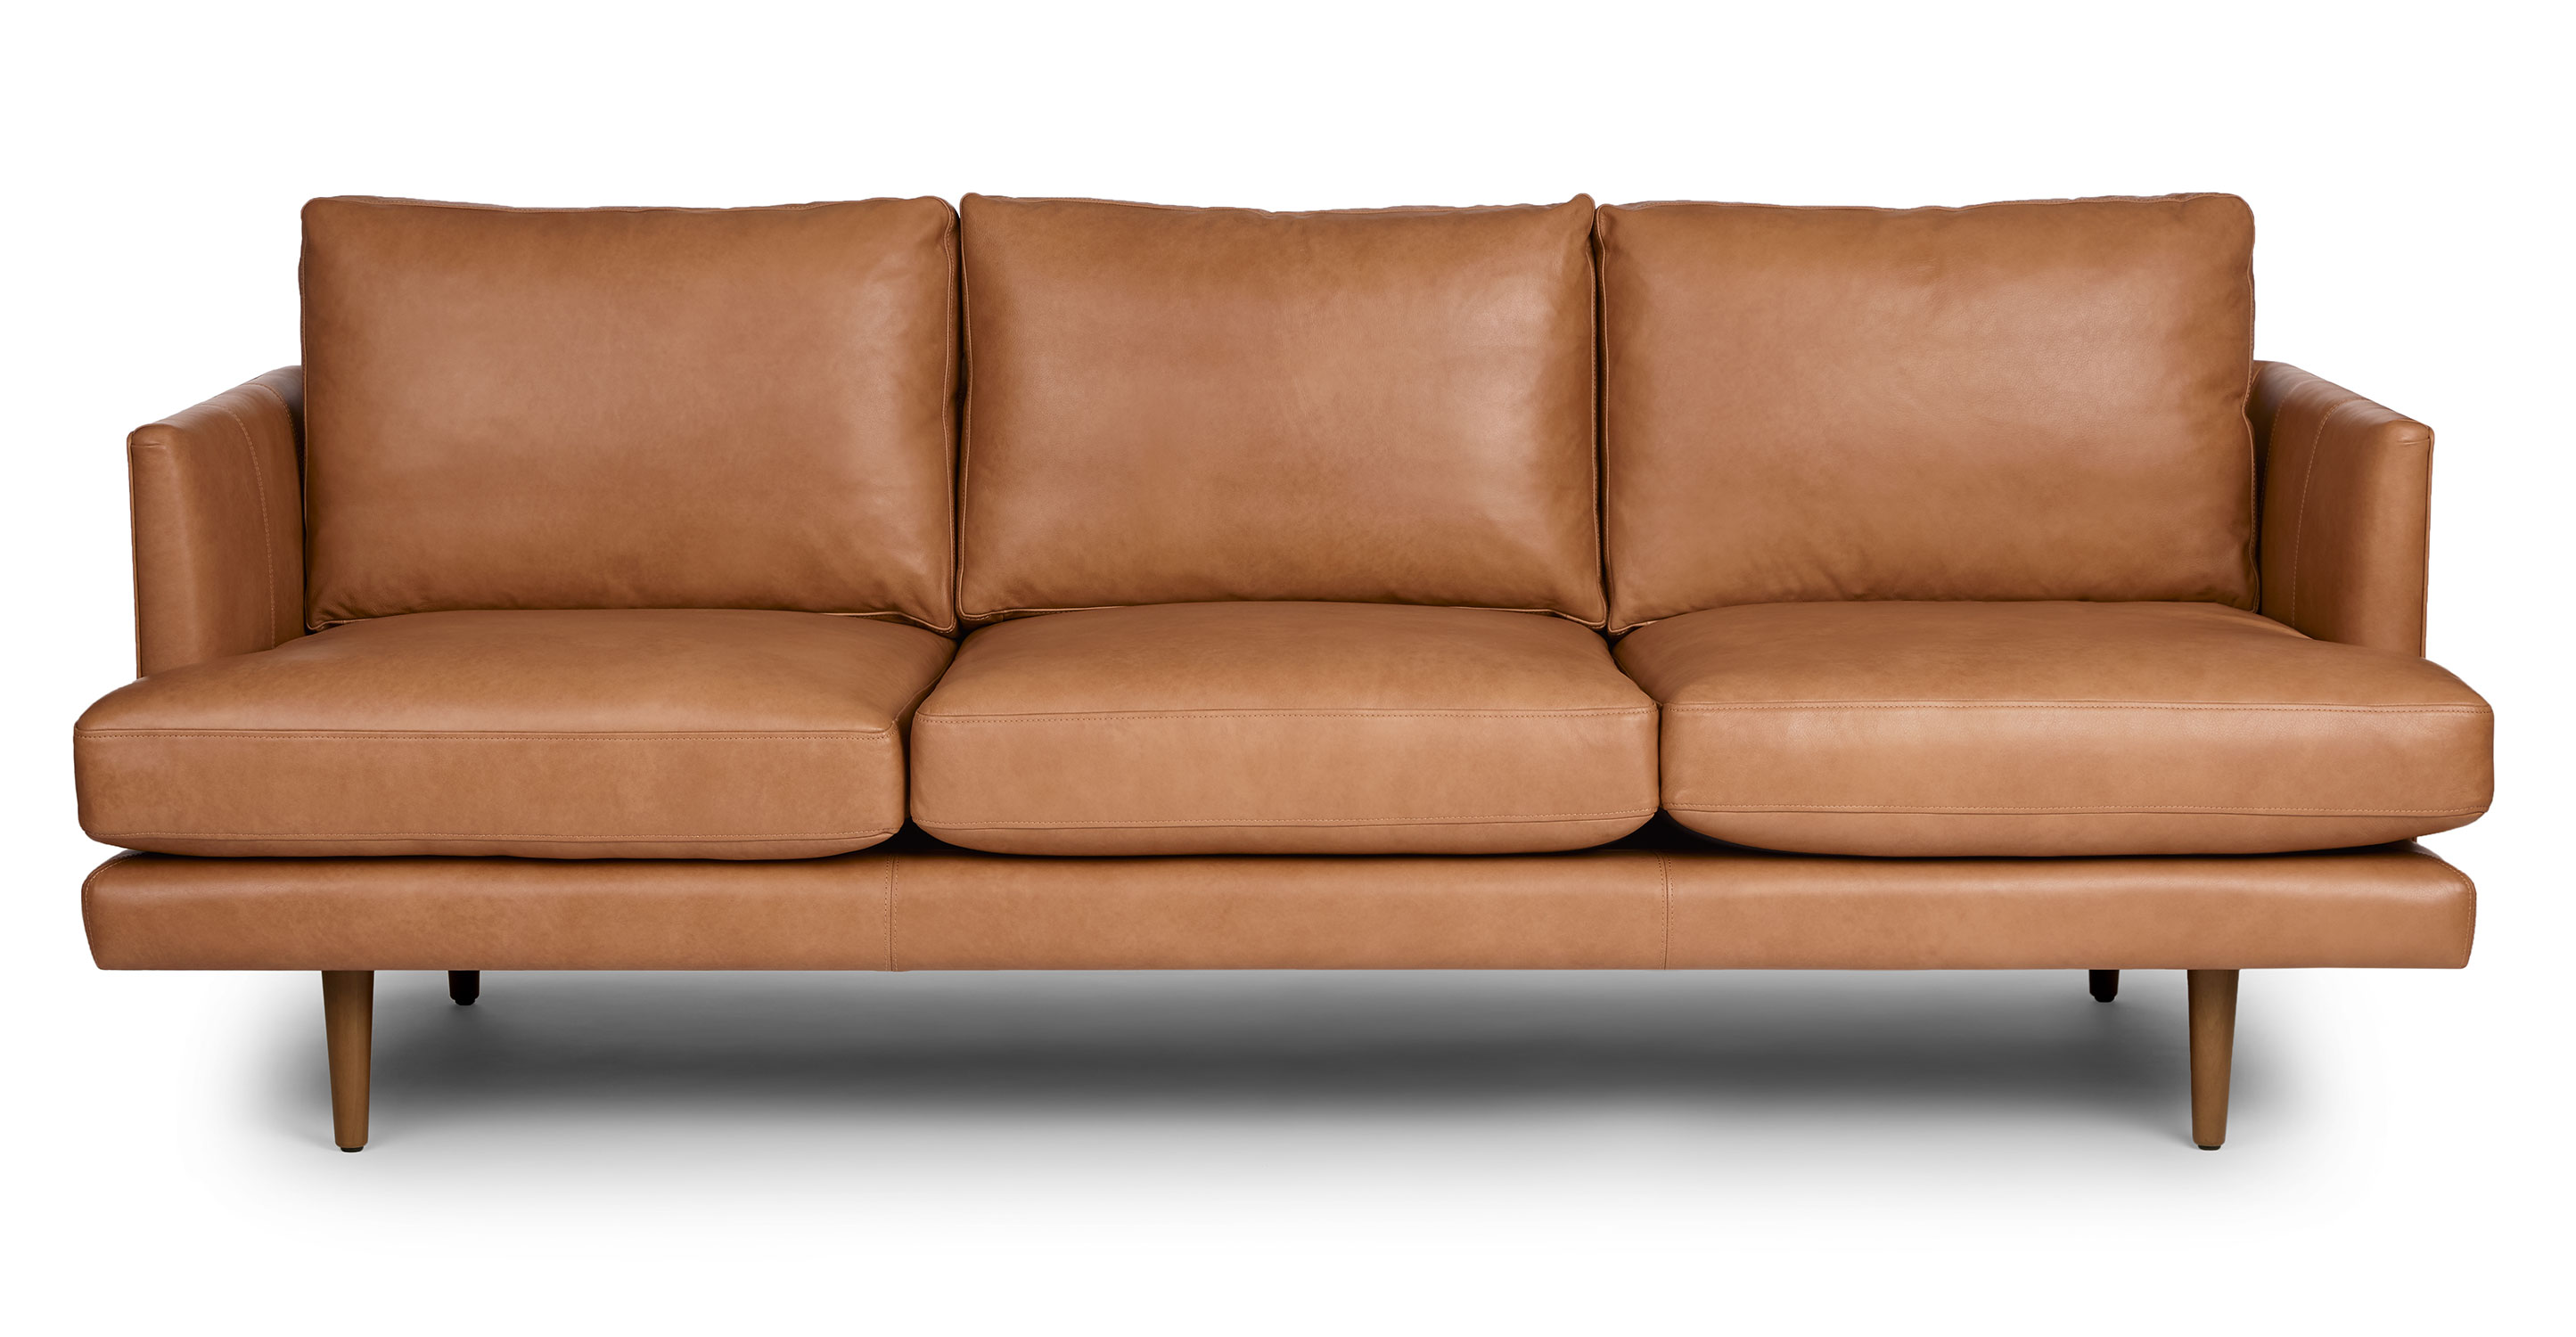 Burrard Walnut &Belle Caramel Leather 3 Seater Sofa | Article